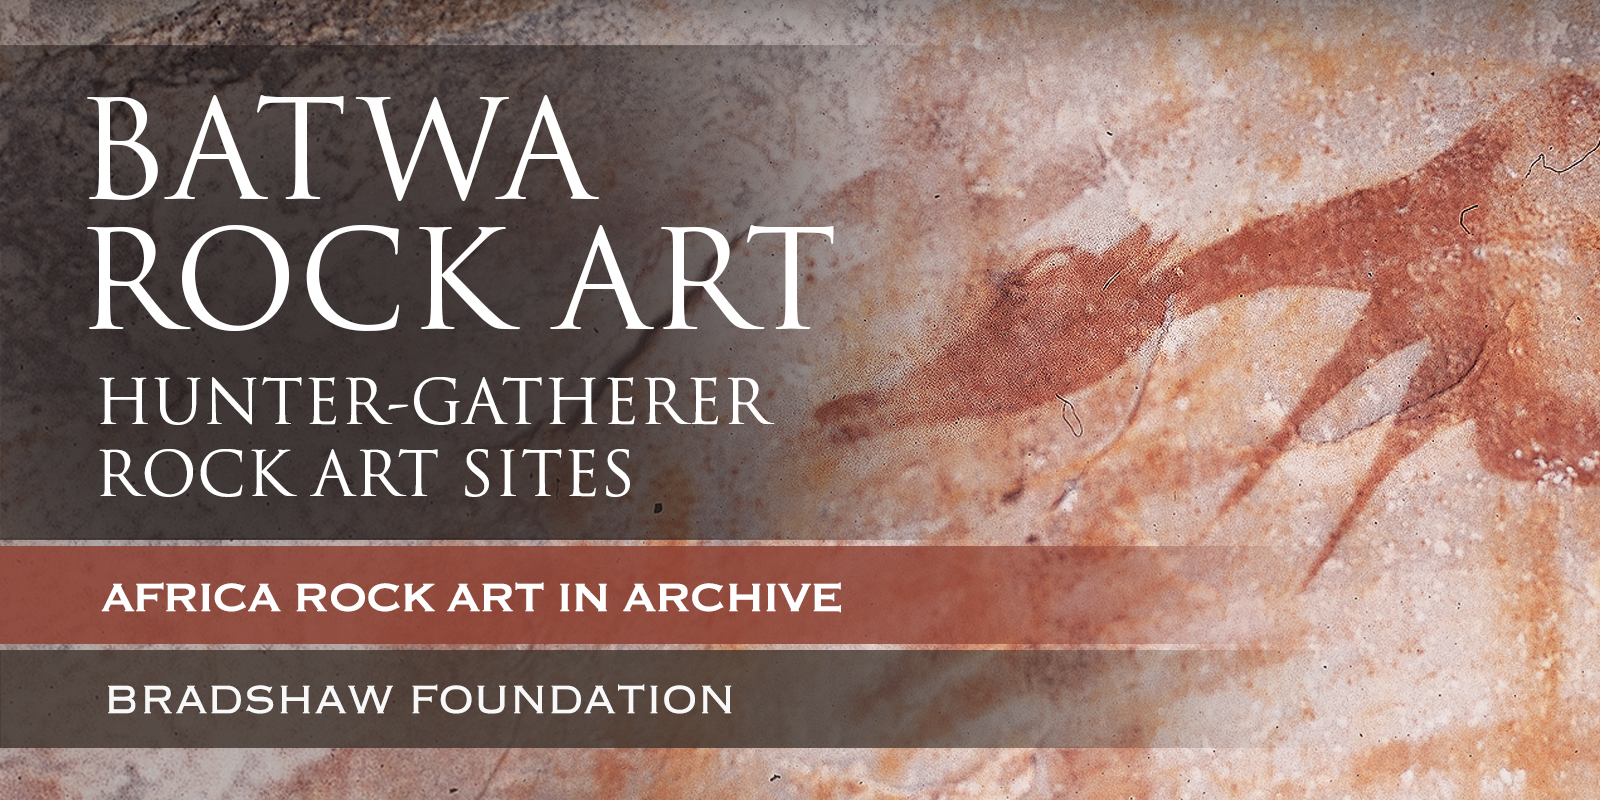 Batwa Africa Africa Rock Art Bradshaw Foundation